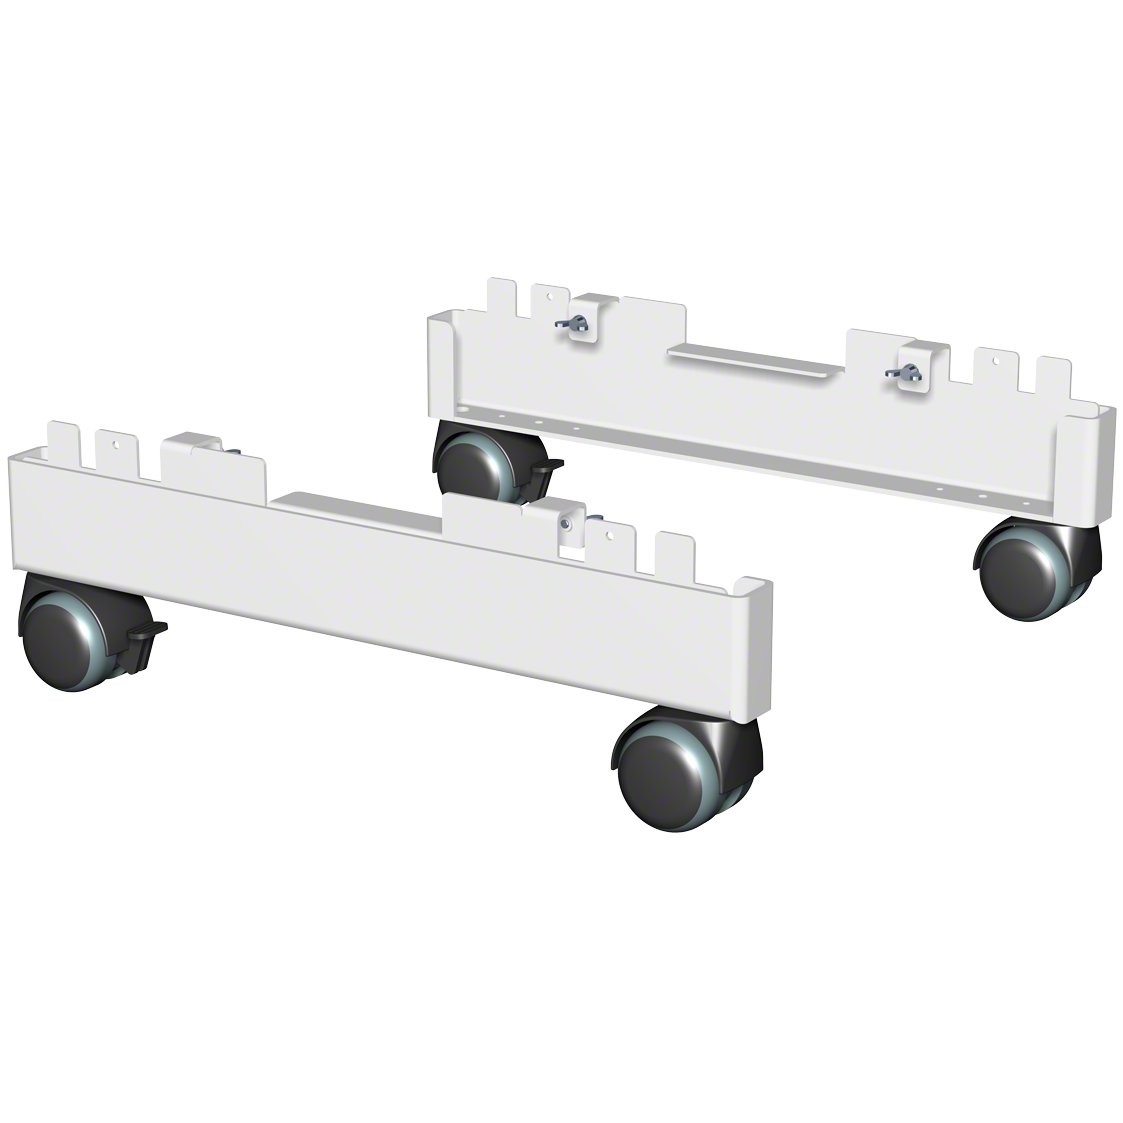 IQAir Mobility 56 (Raised Caster Kit) комплект роликов для поднятия уровня воздухозаборника